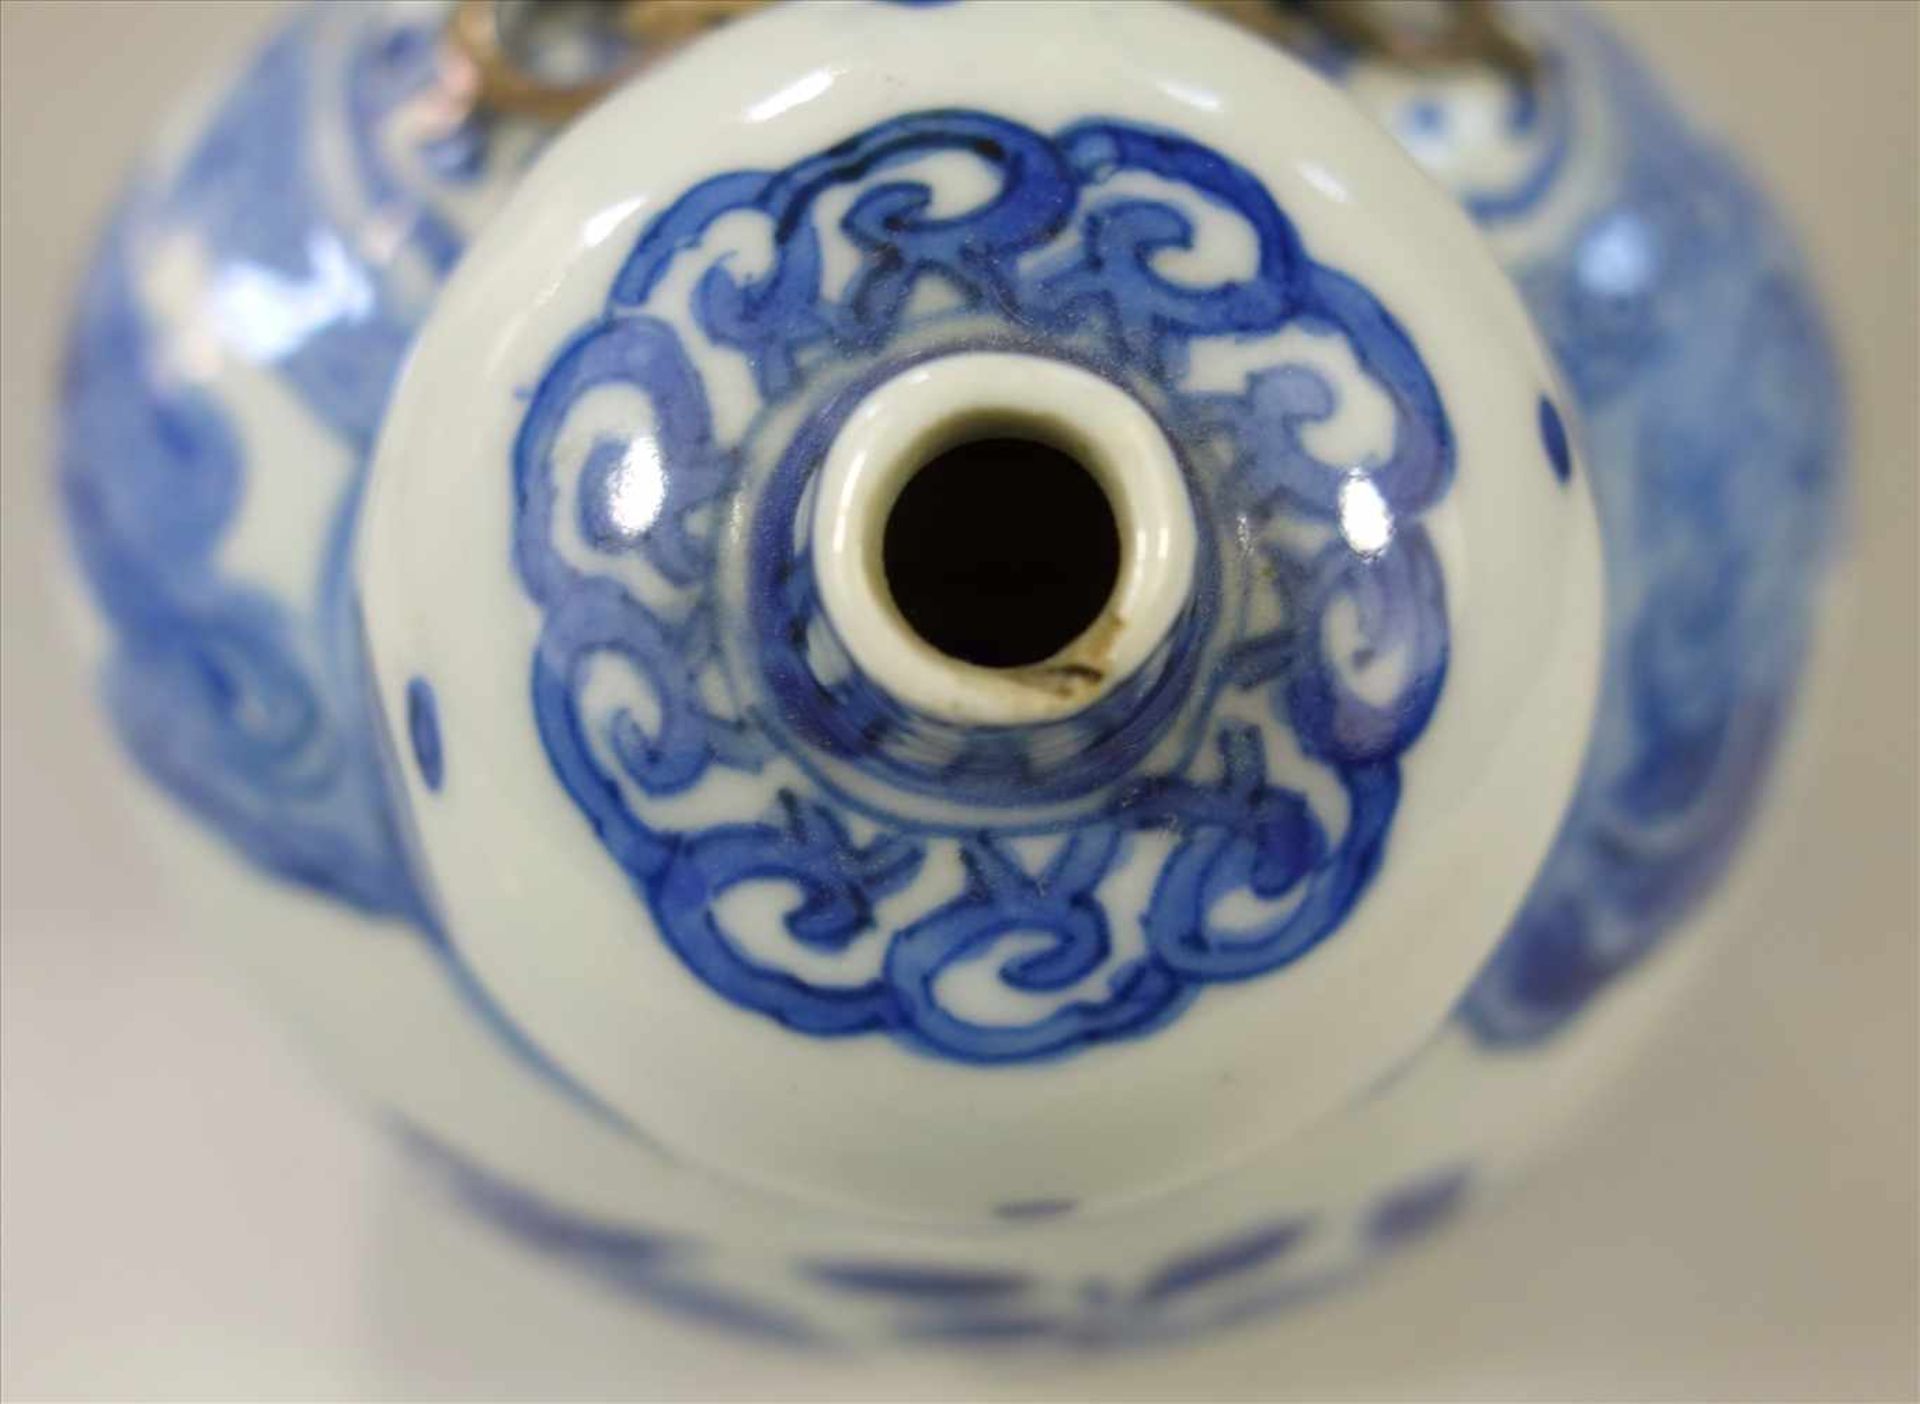 Kendi, wohl Ming, Wanli-Periode, China, 16./17.Jh., weißes Porzellan mit blauer Bemalung, vergoldete - Image 5 of 7